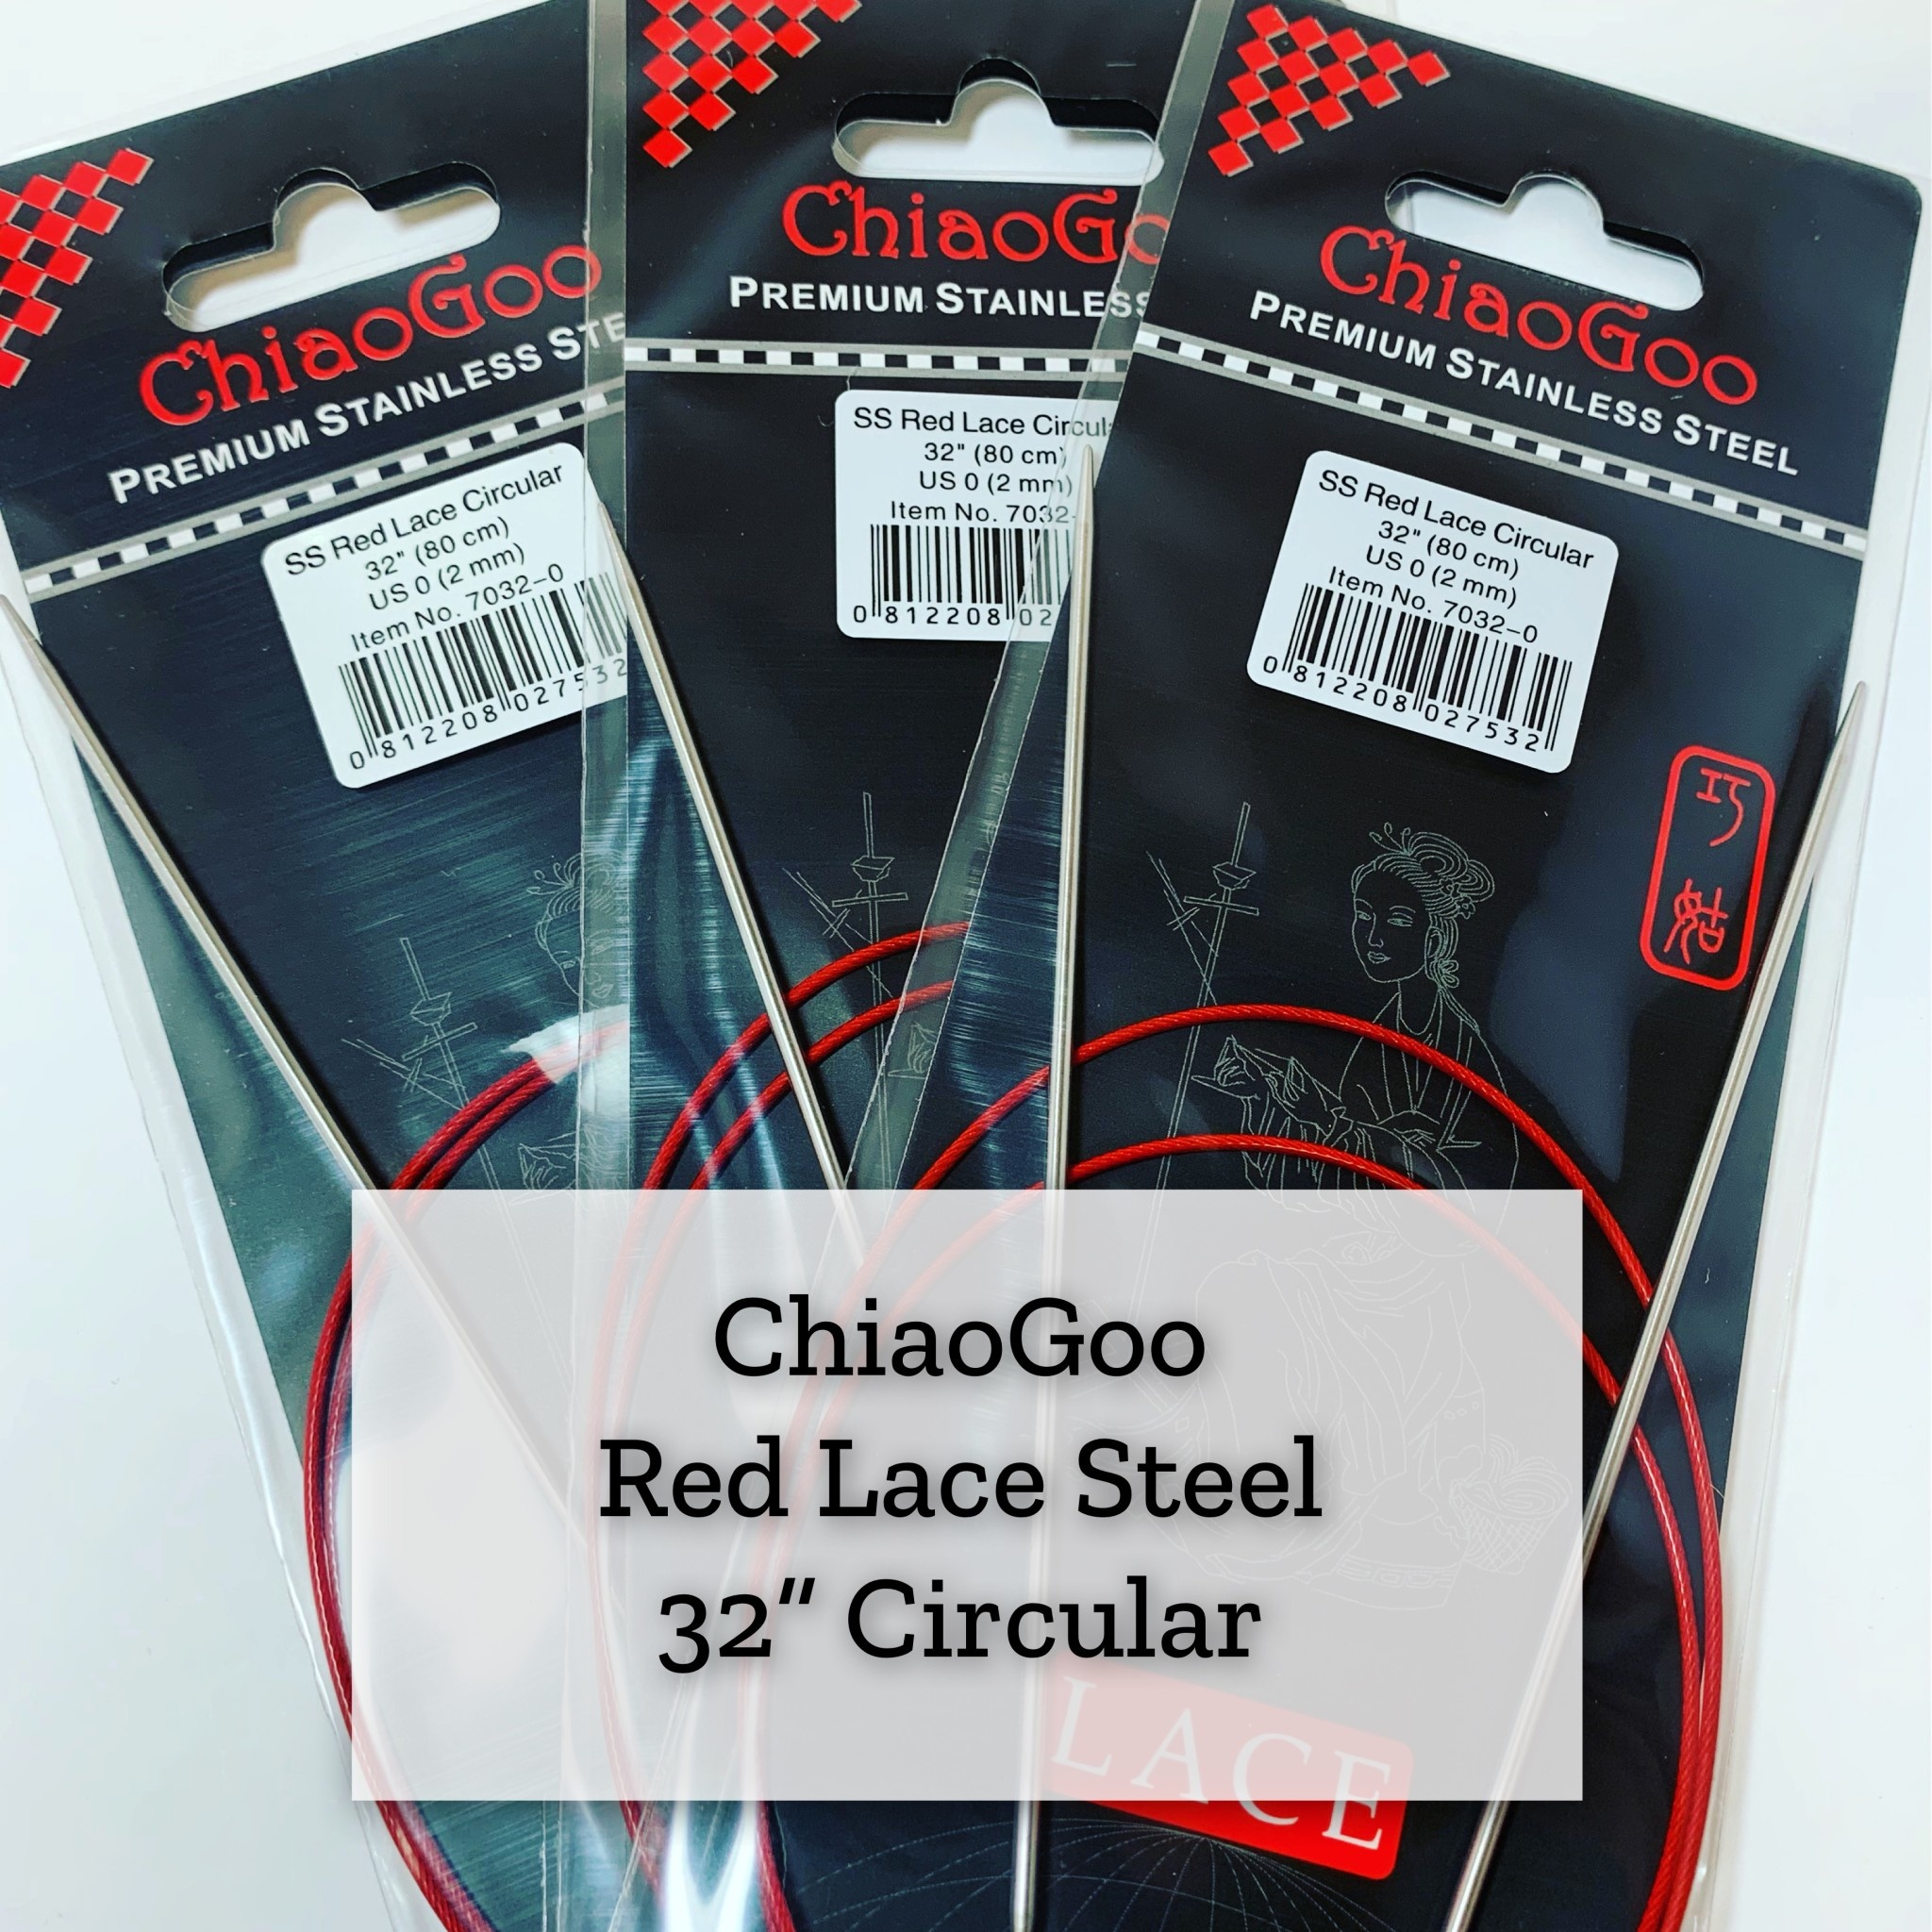 ChiaoGoo Red Lace Steel - 32" 6 mm